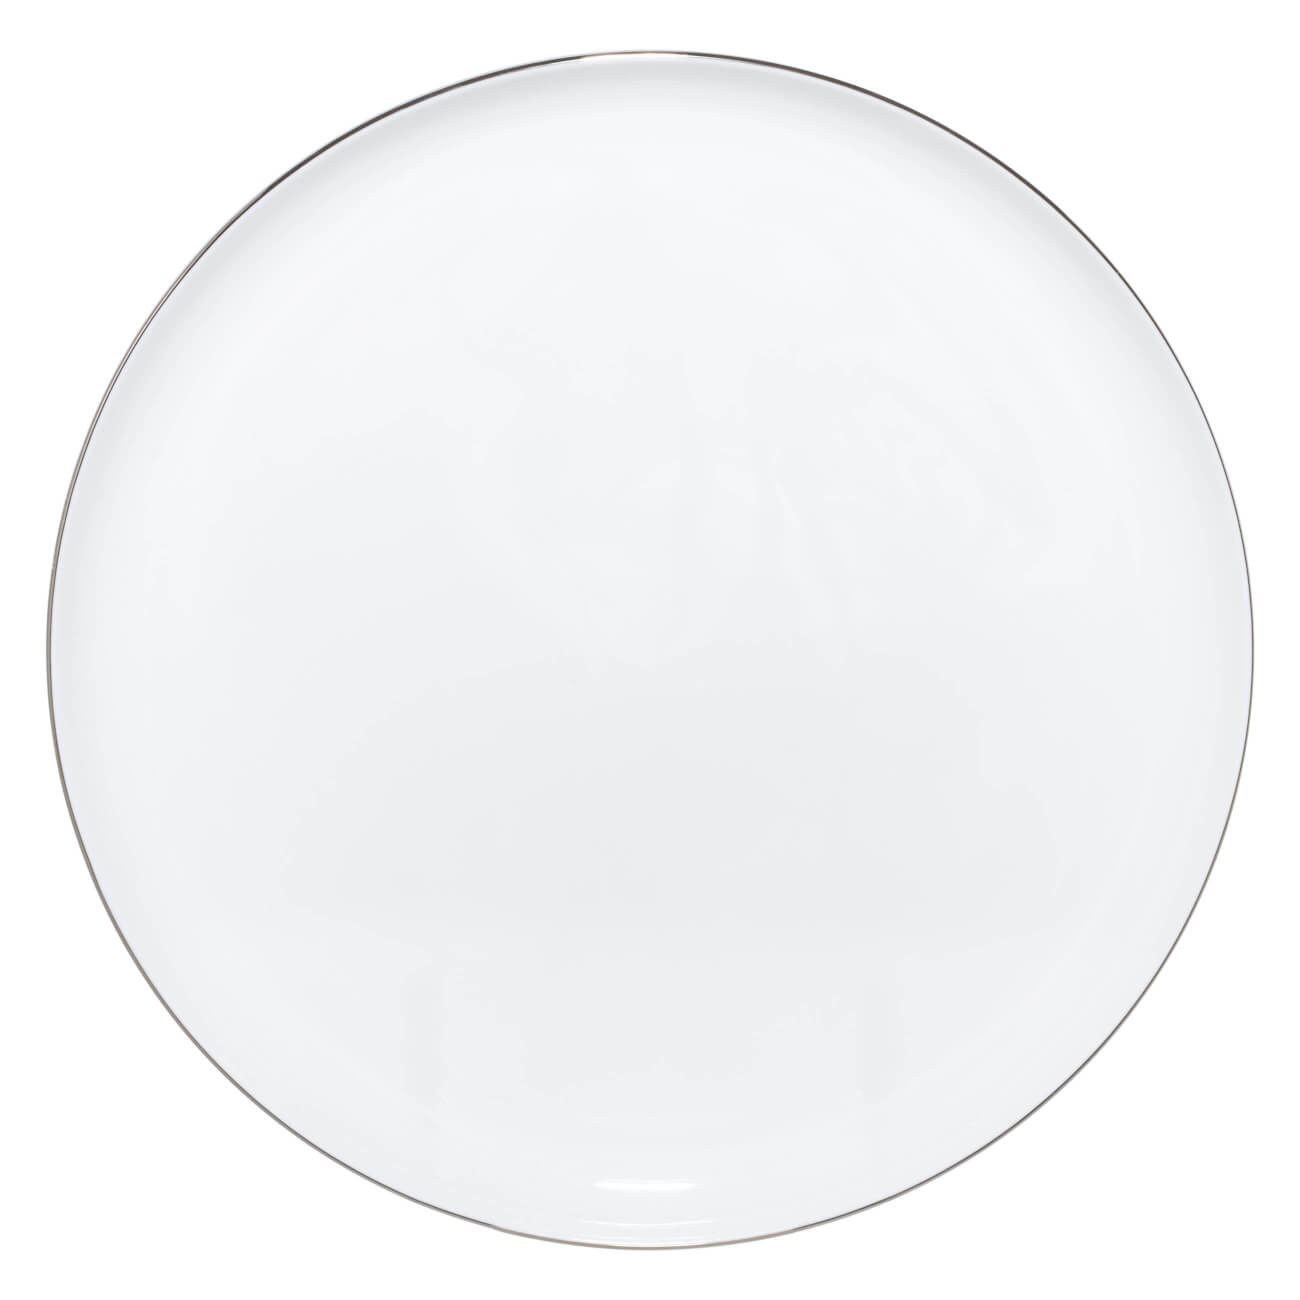 Тарелка обеденная, 28 см, фарфор F, Antarctica тарелка обеденная 28 см фарфор f antarctica